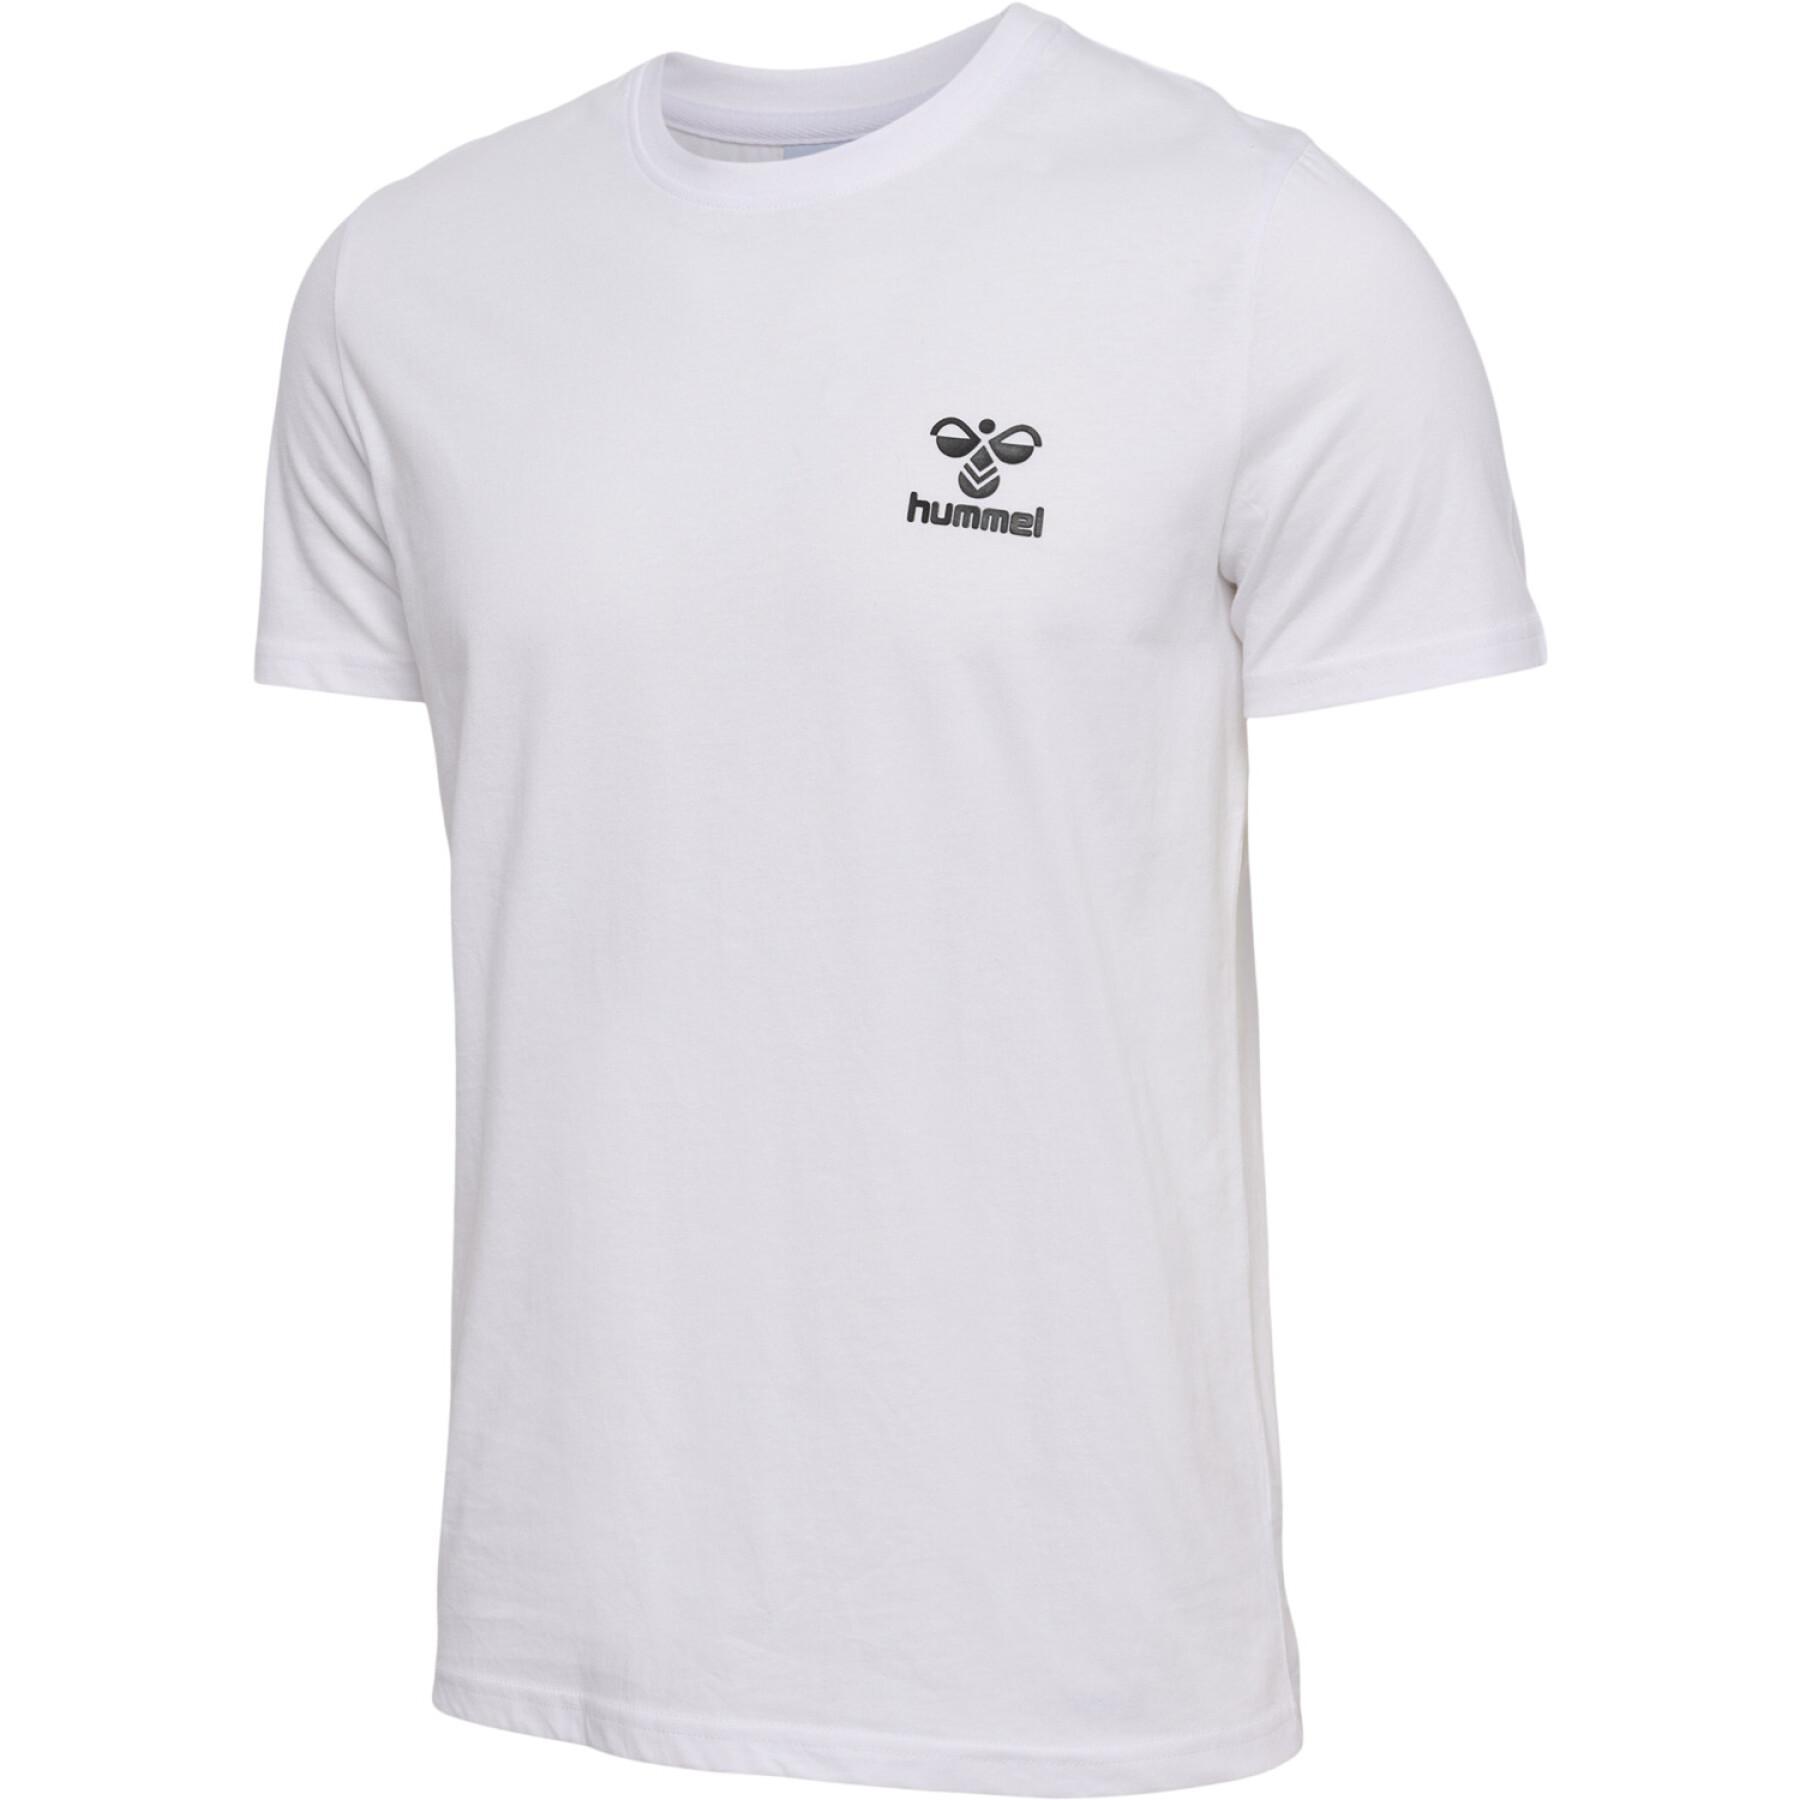 T-shirt Hummel Icons - Hummel - Brands Lifestyle 